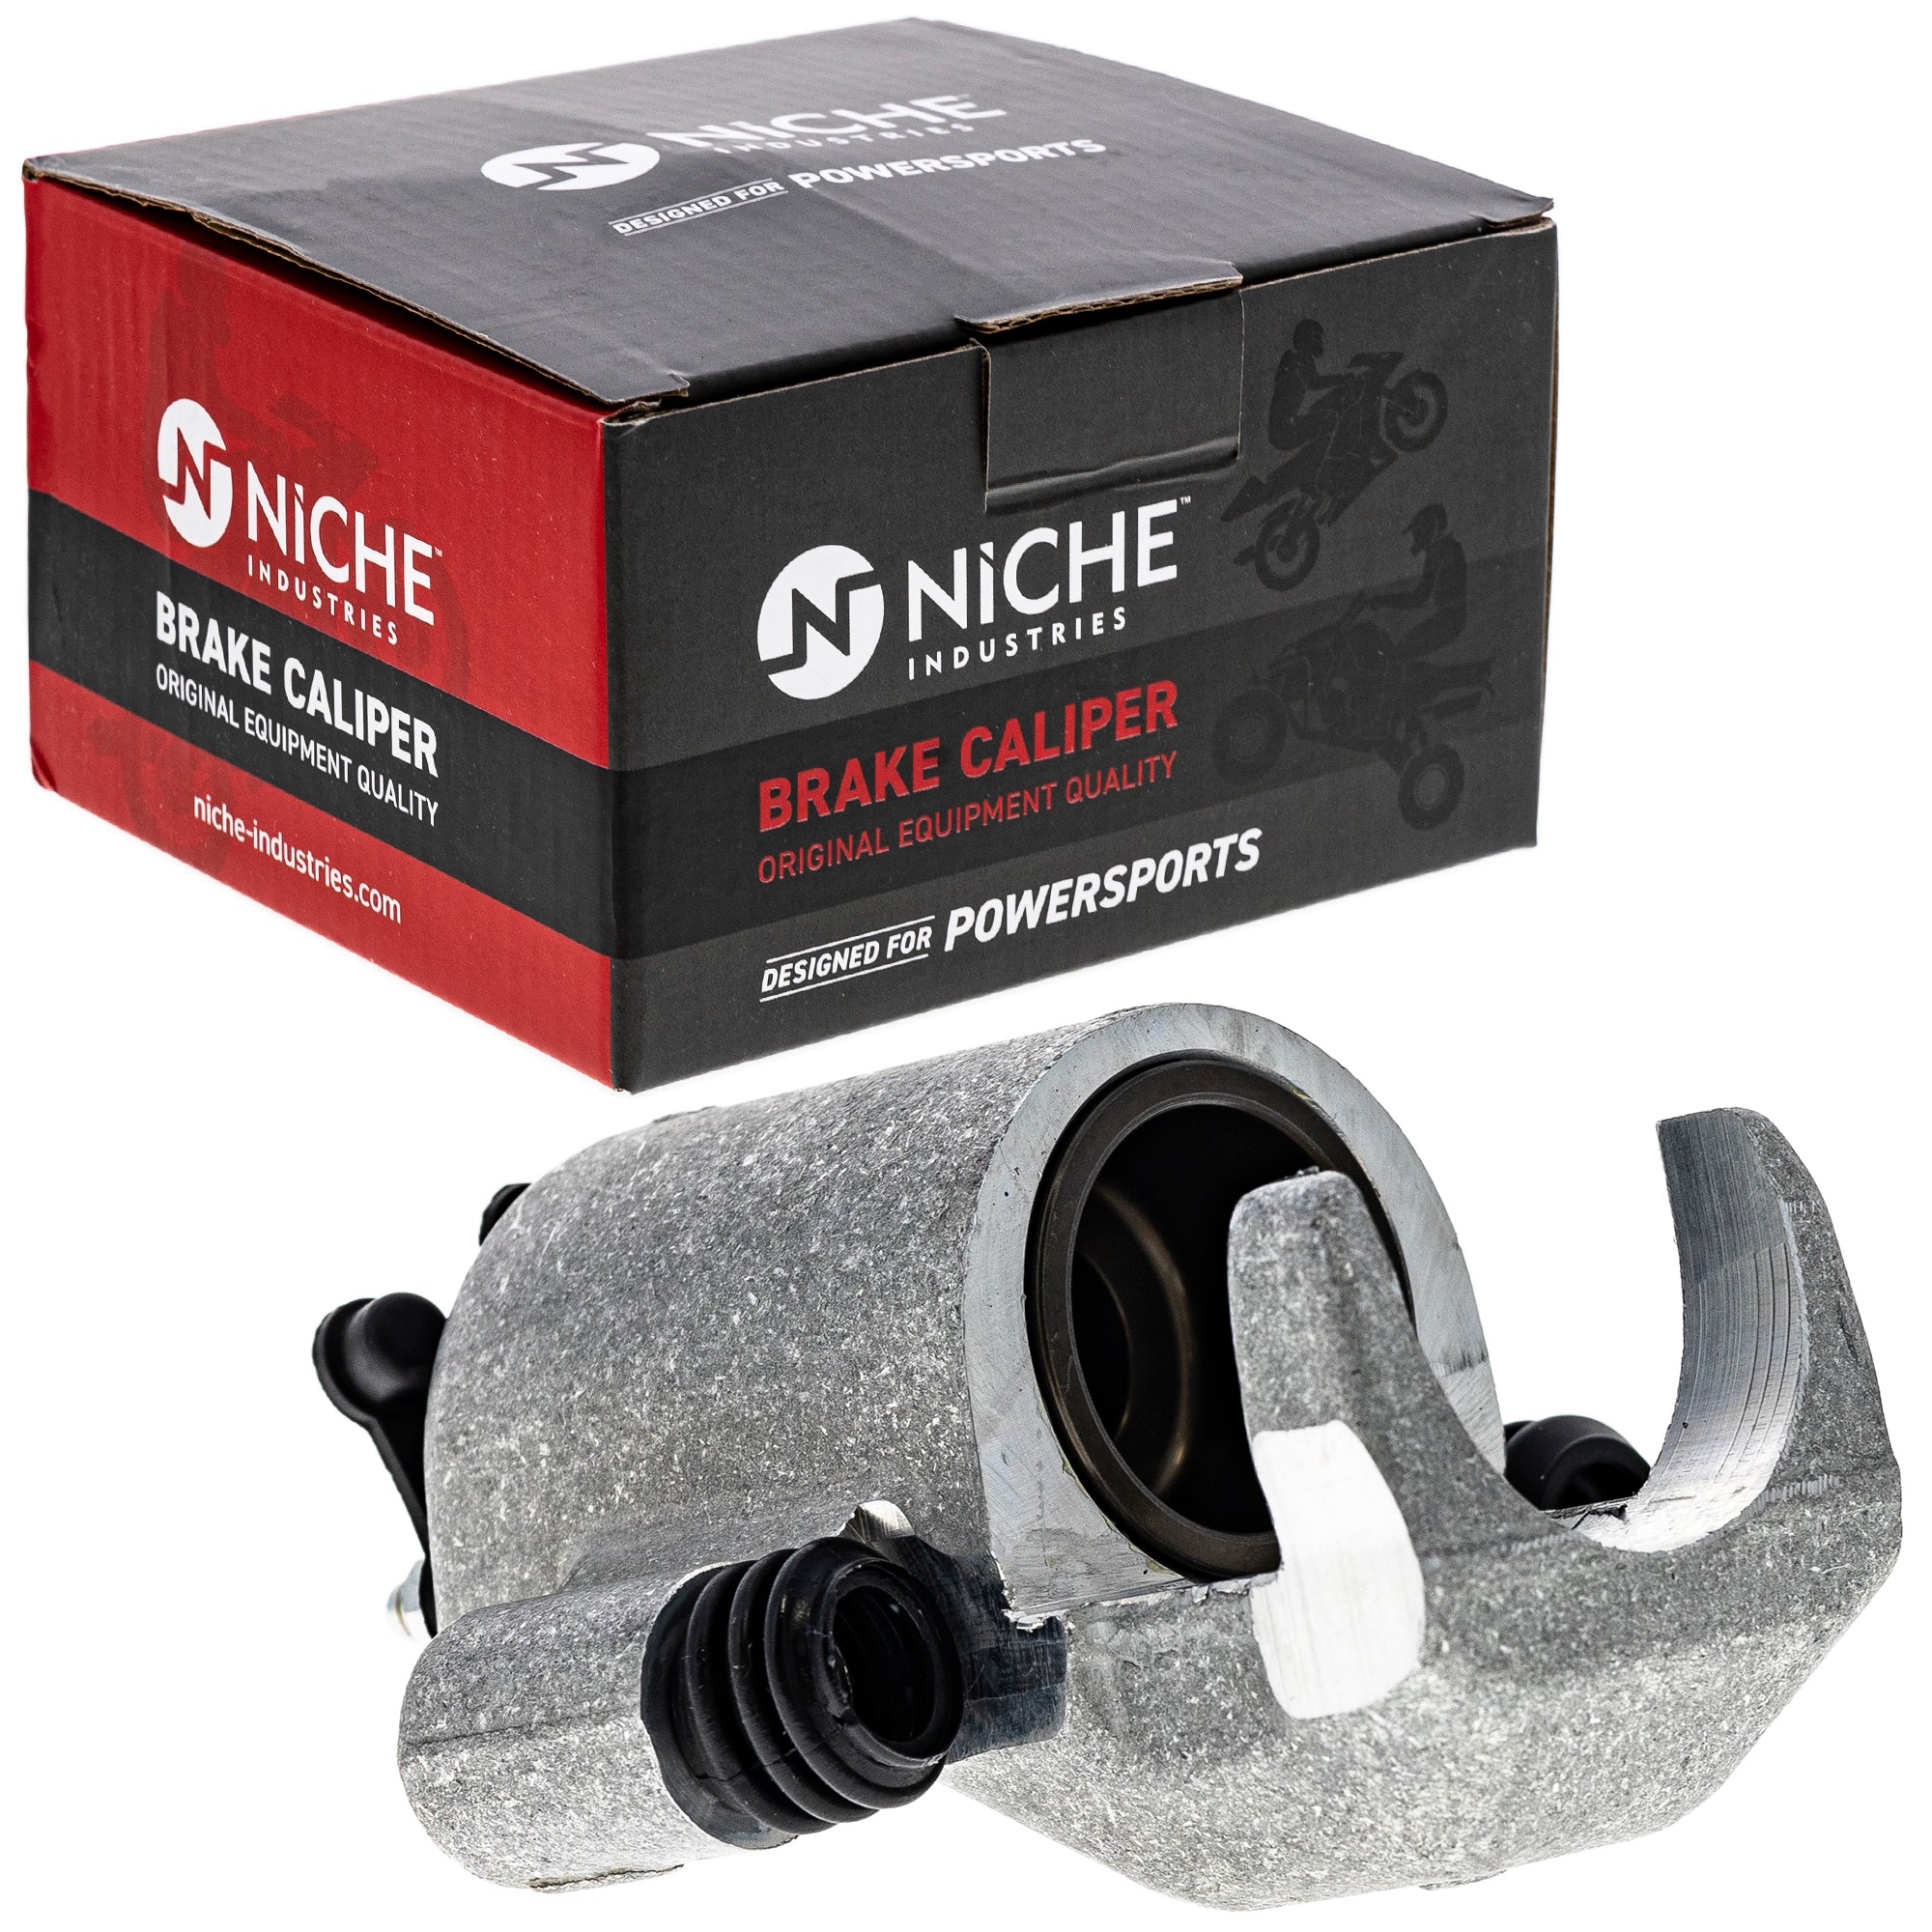 NICHE 519-CCL2245P Brake Caliper Assembly for Polaris Sportsman